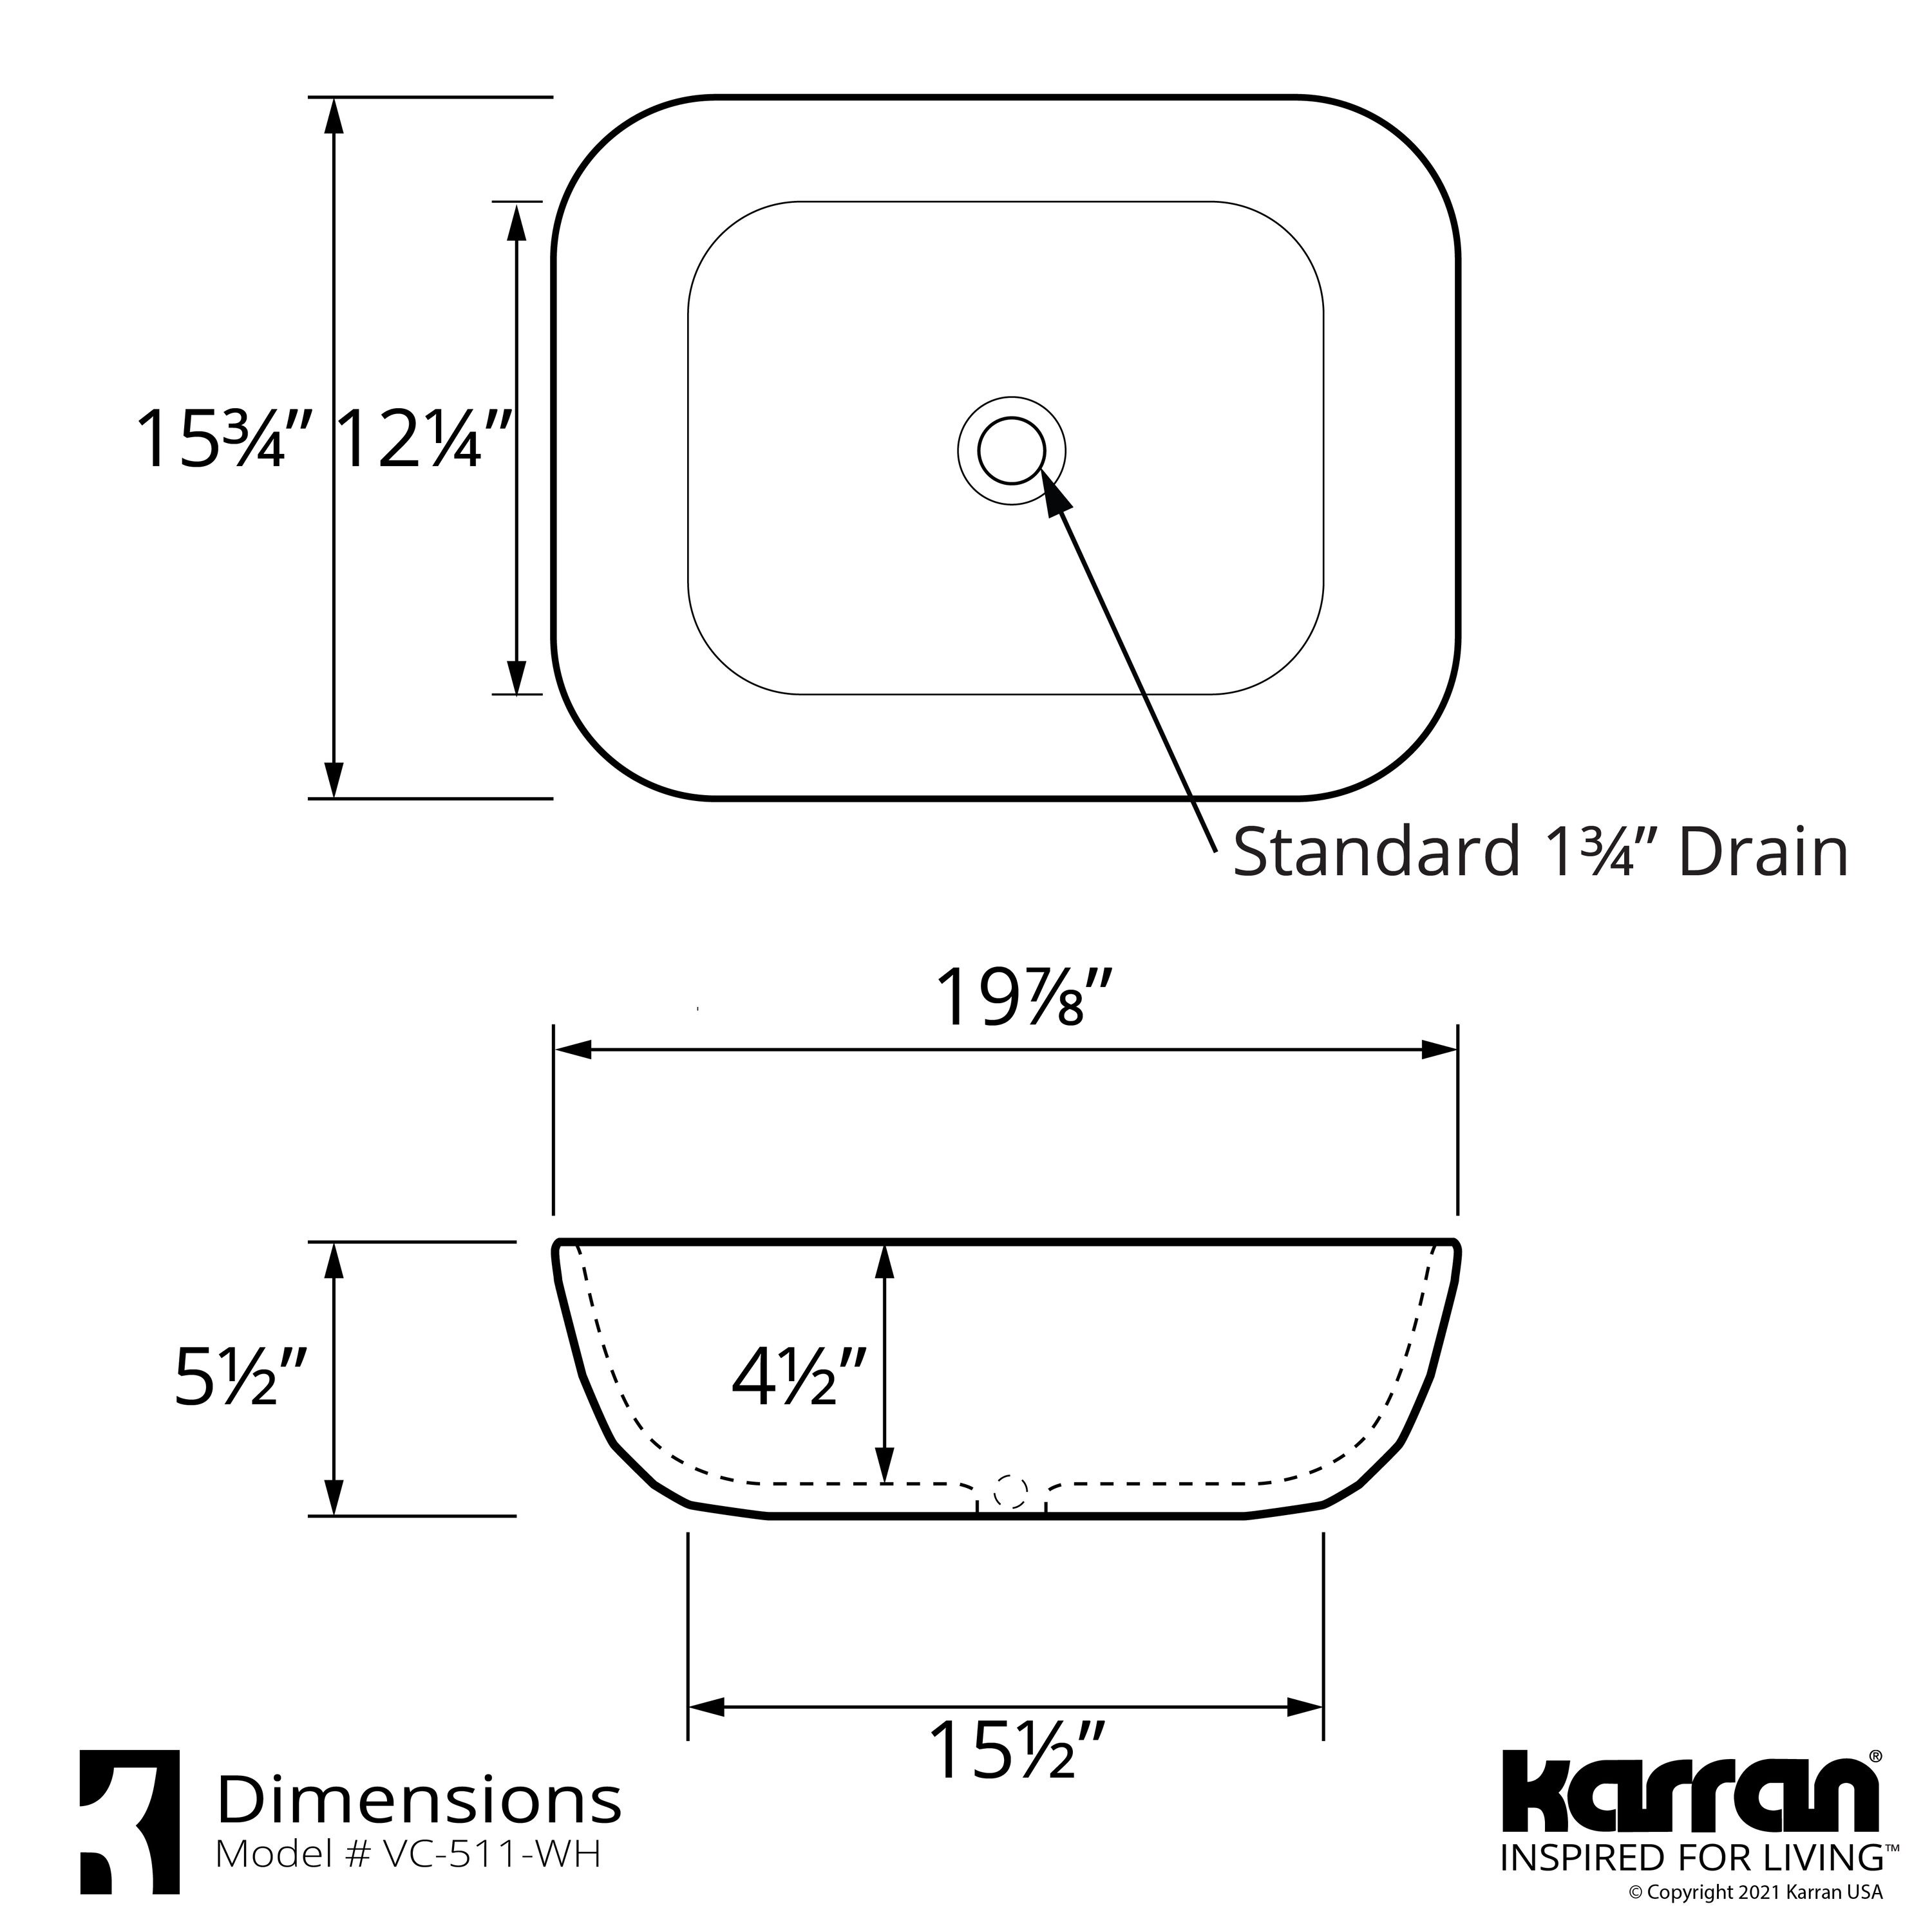 Karran Valera White/Glossy Vessel Rectangular Modern Bathroom Sink (19.875-in x 15.75-in)